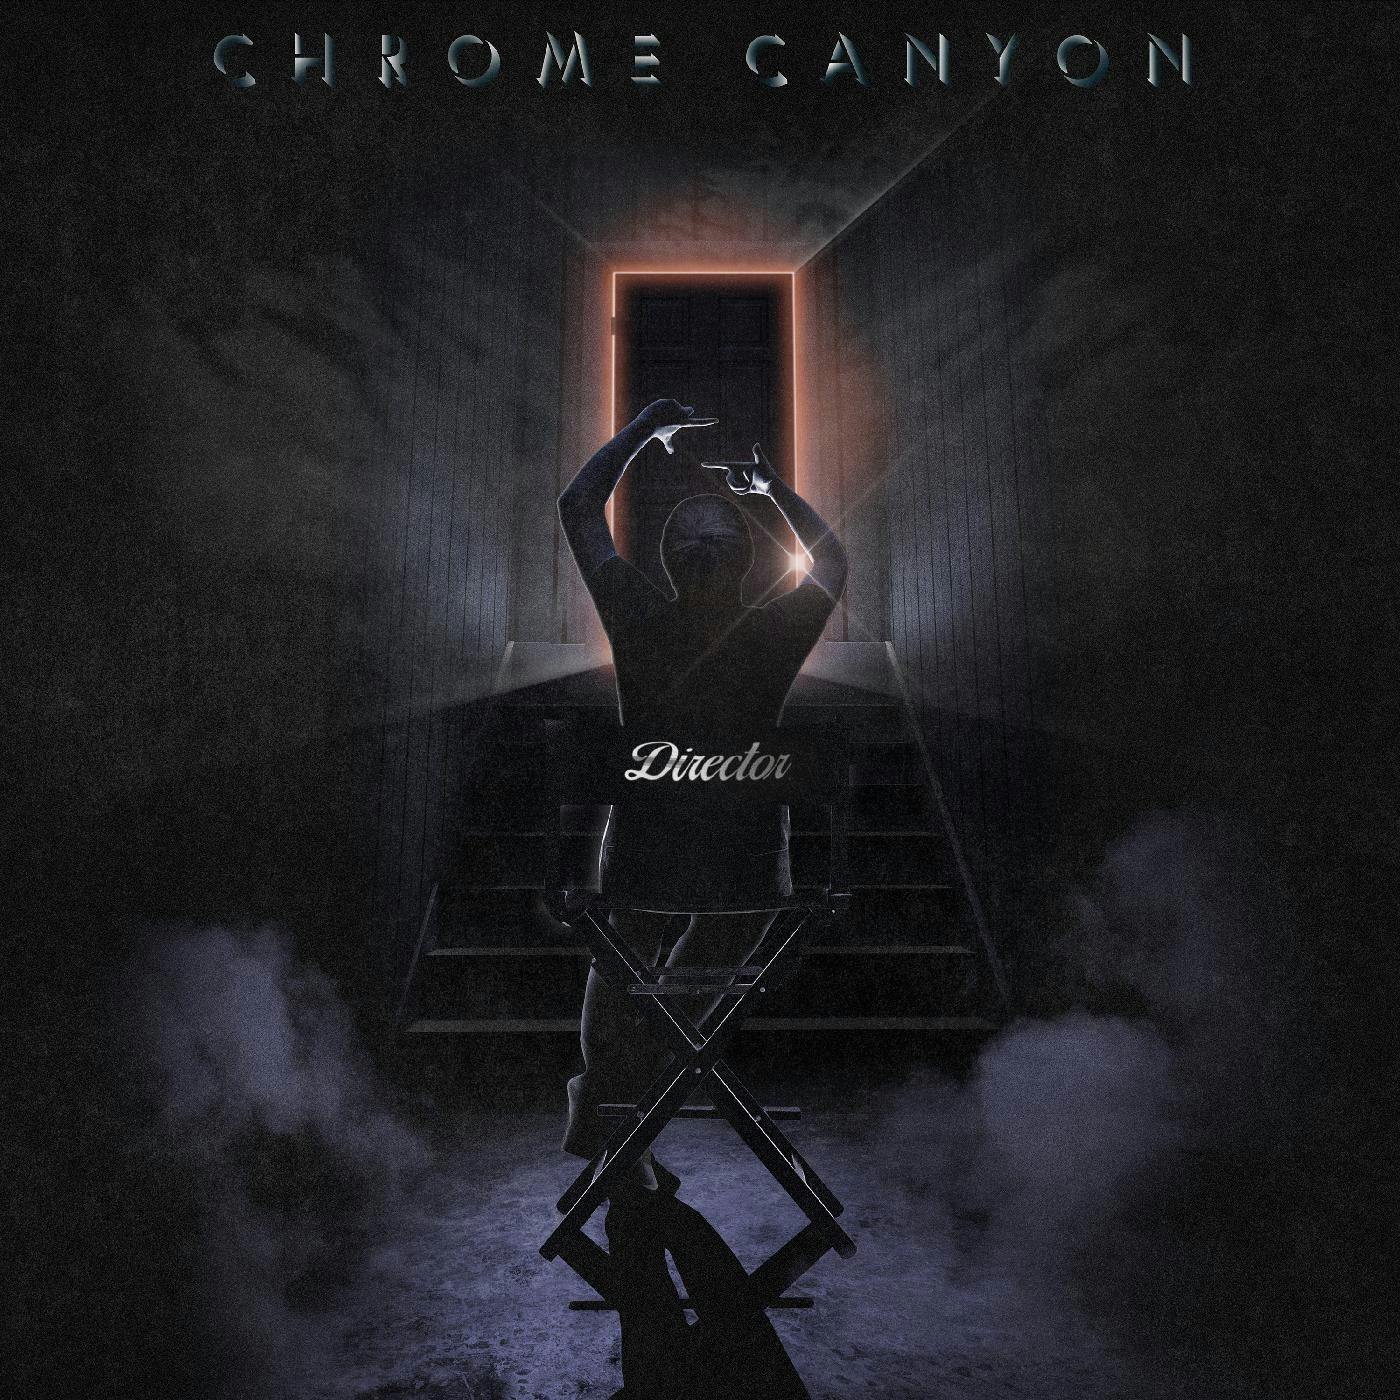 Album artwork for Album artwork for Director by Chrome Canyon by Director - Chrome Canyon